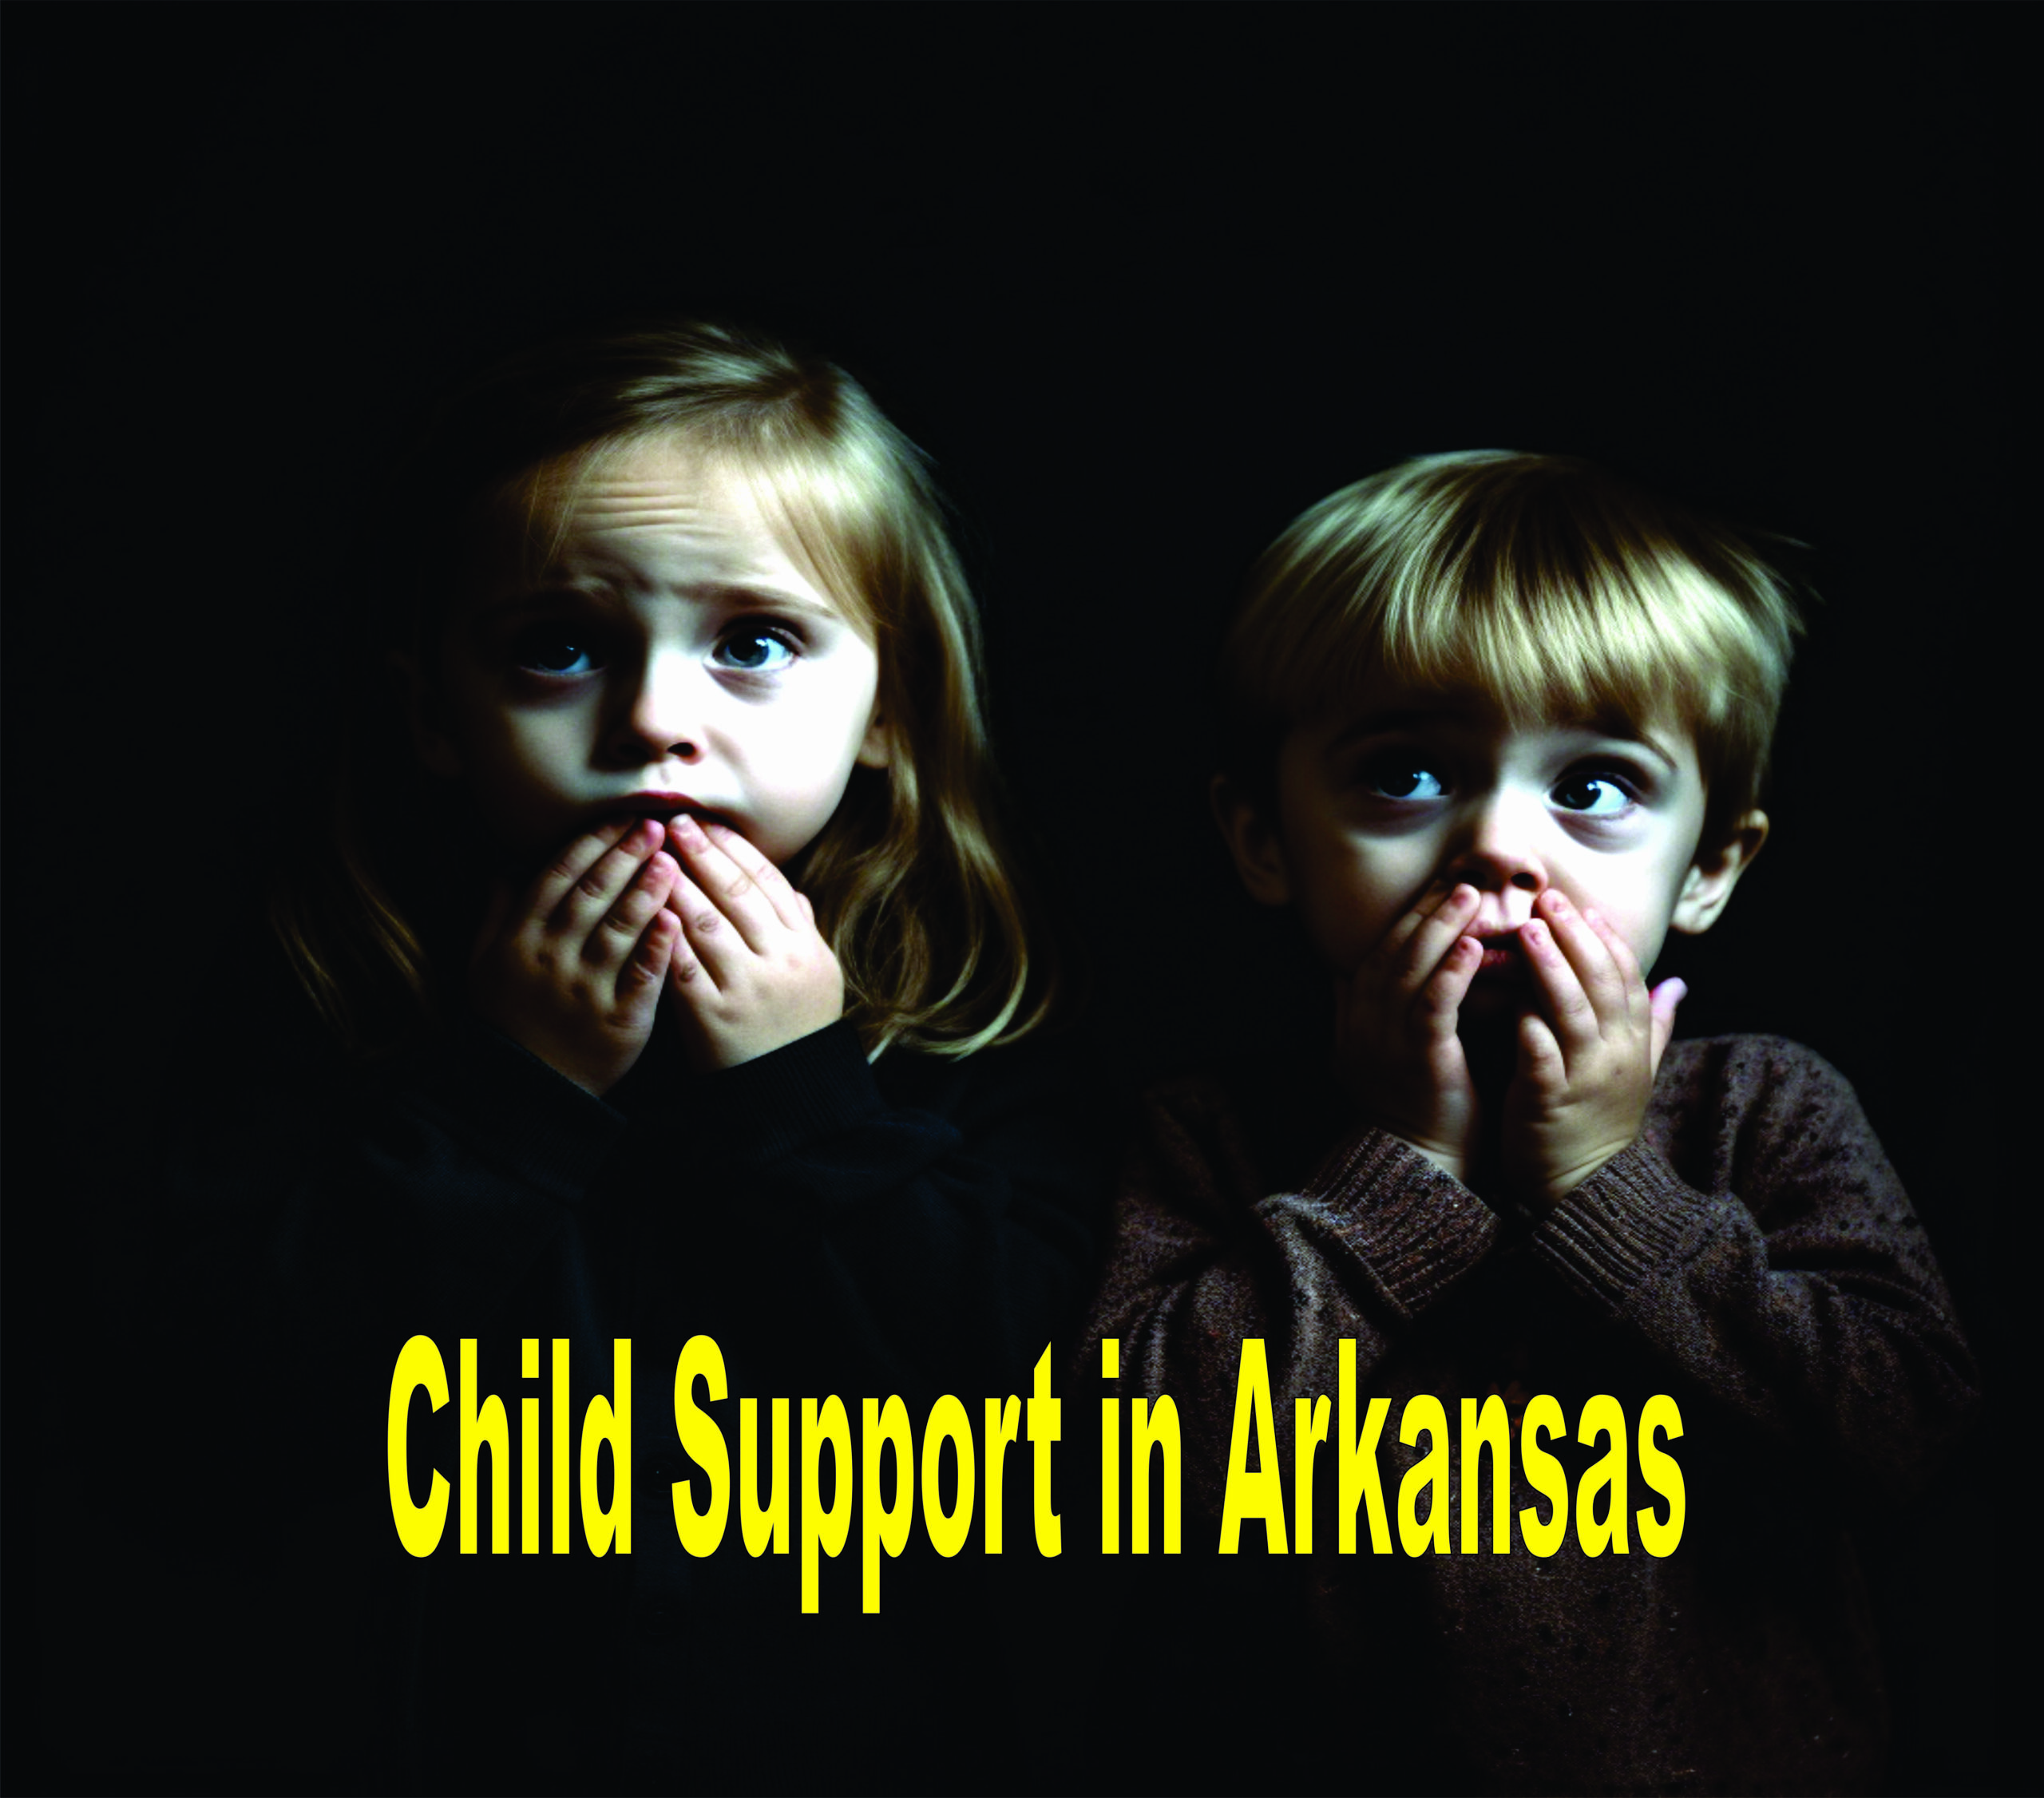 Child Support In Arkansas